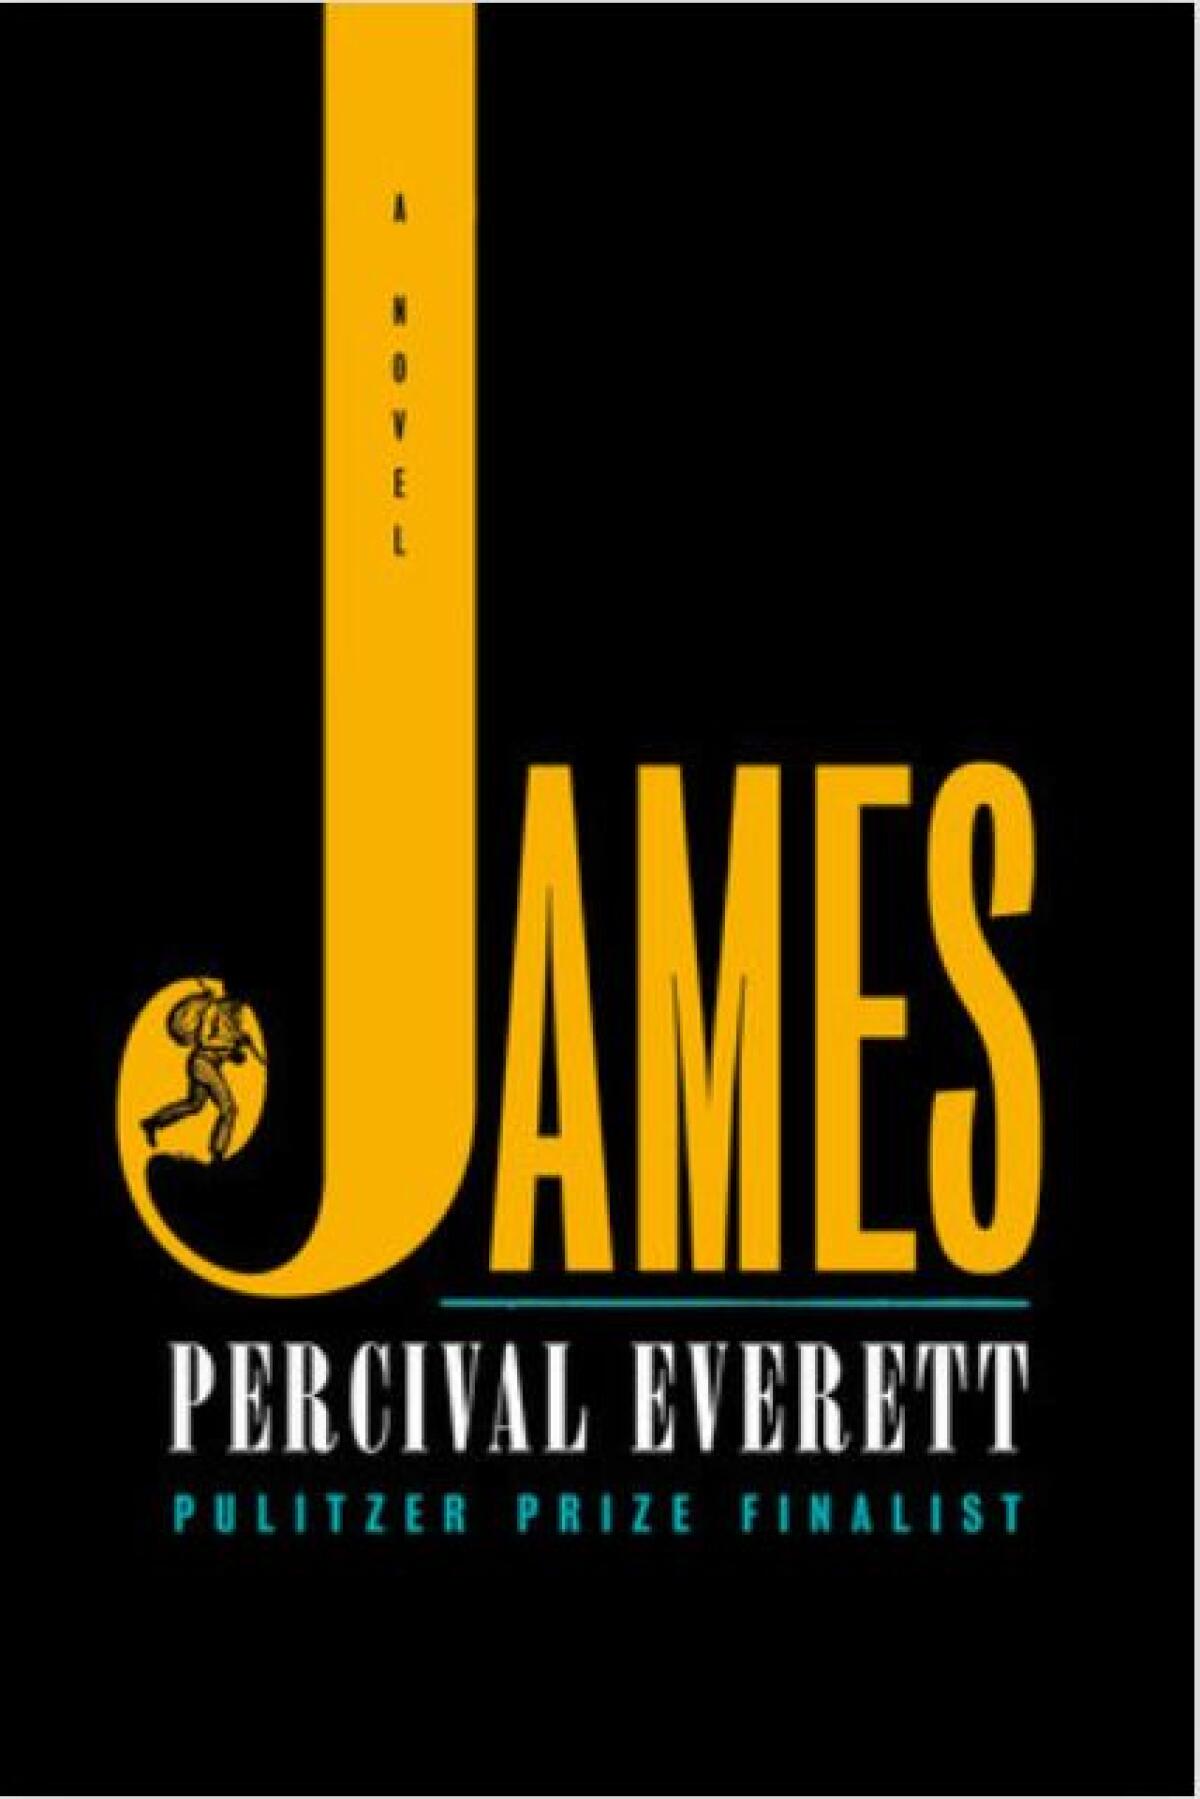 "James," by Percival Everett